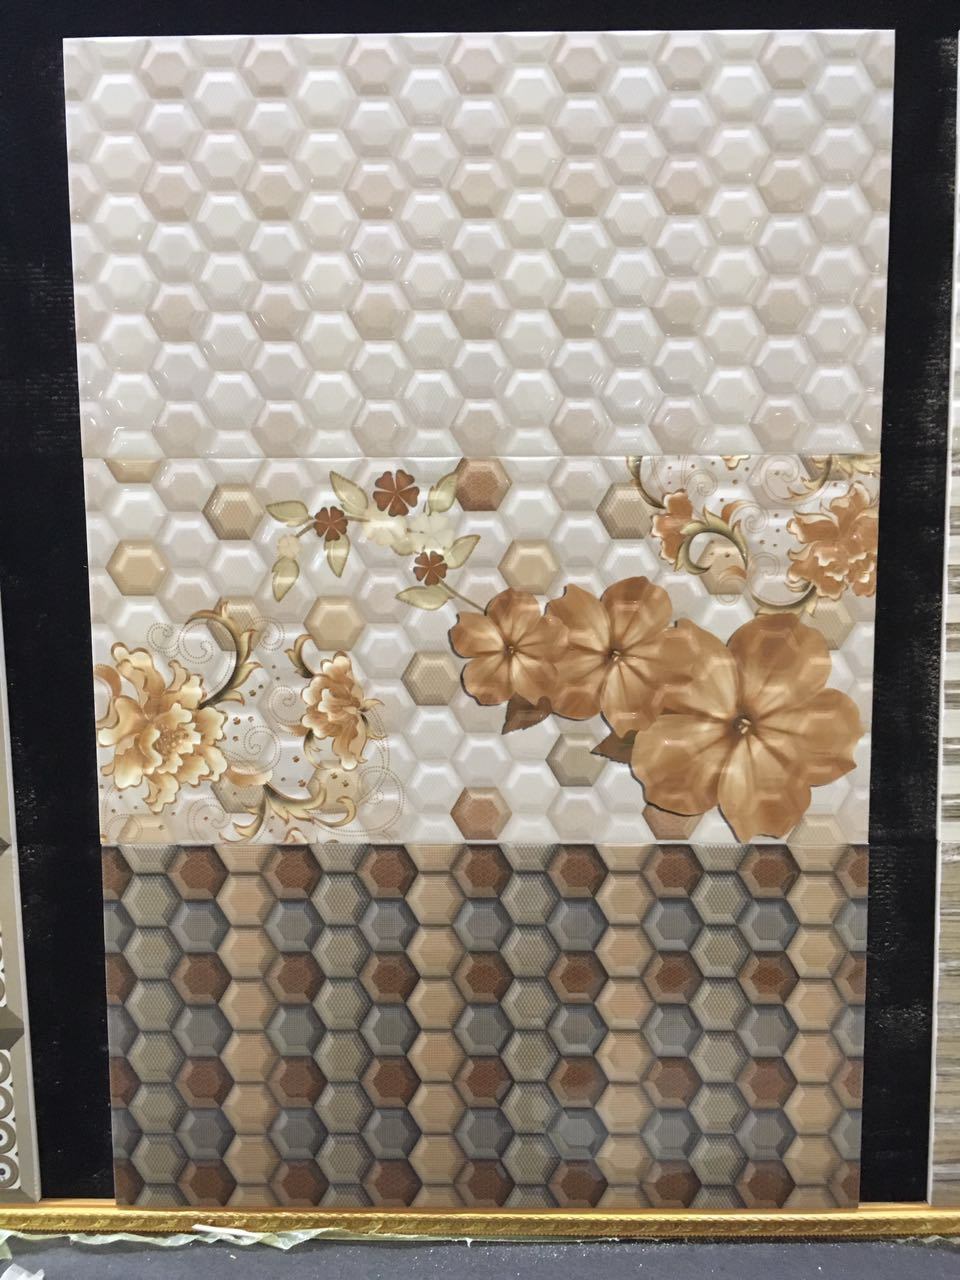 Building Material Hexagonal Mosaic Bathroom Ceramic Wall Tile